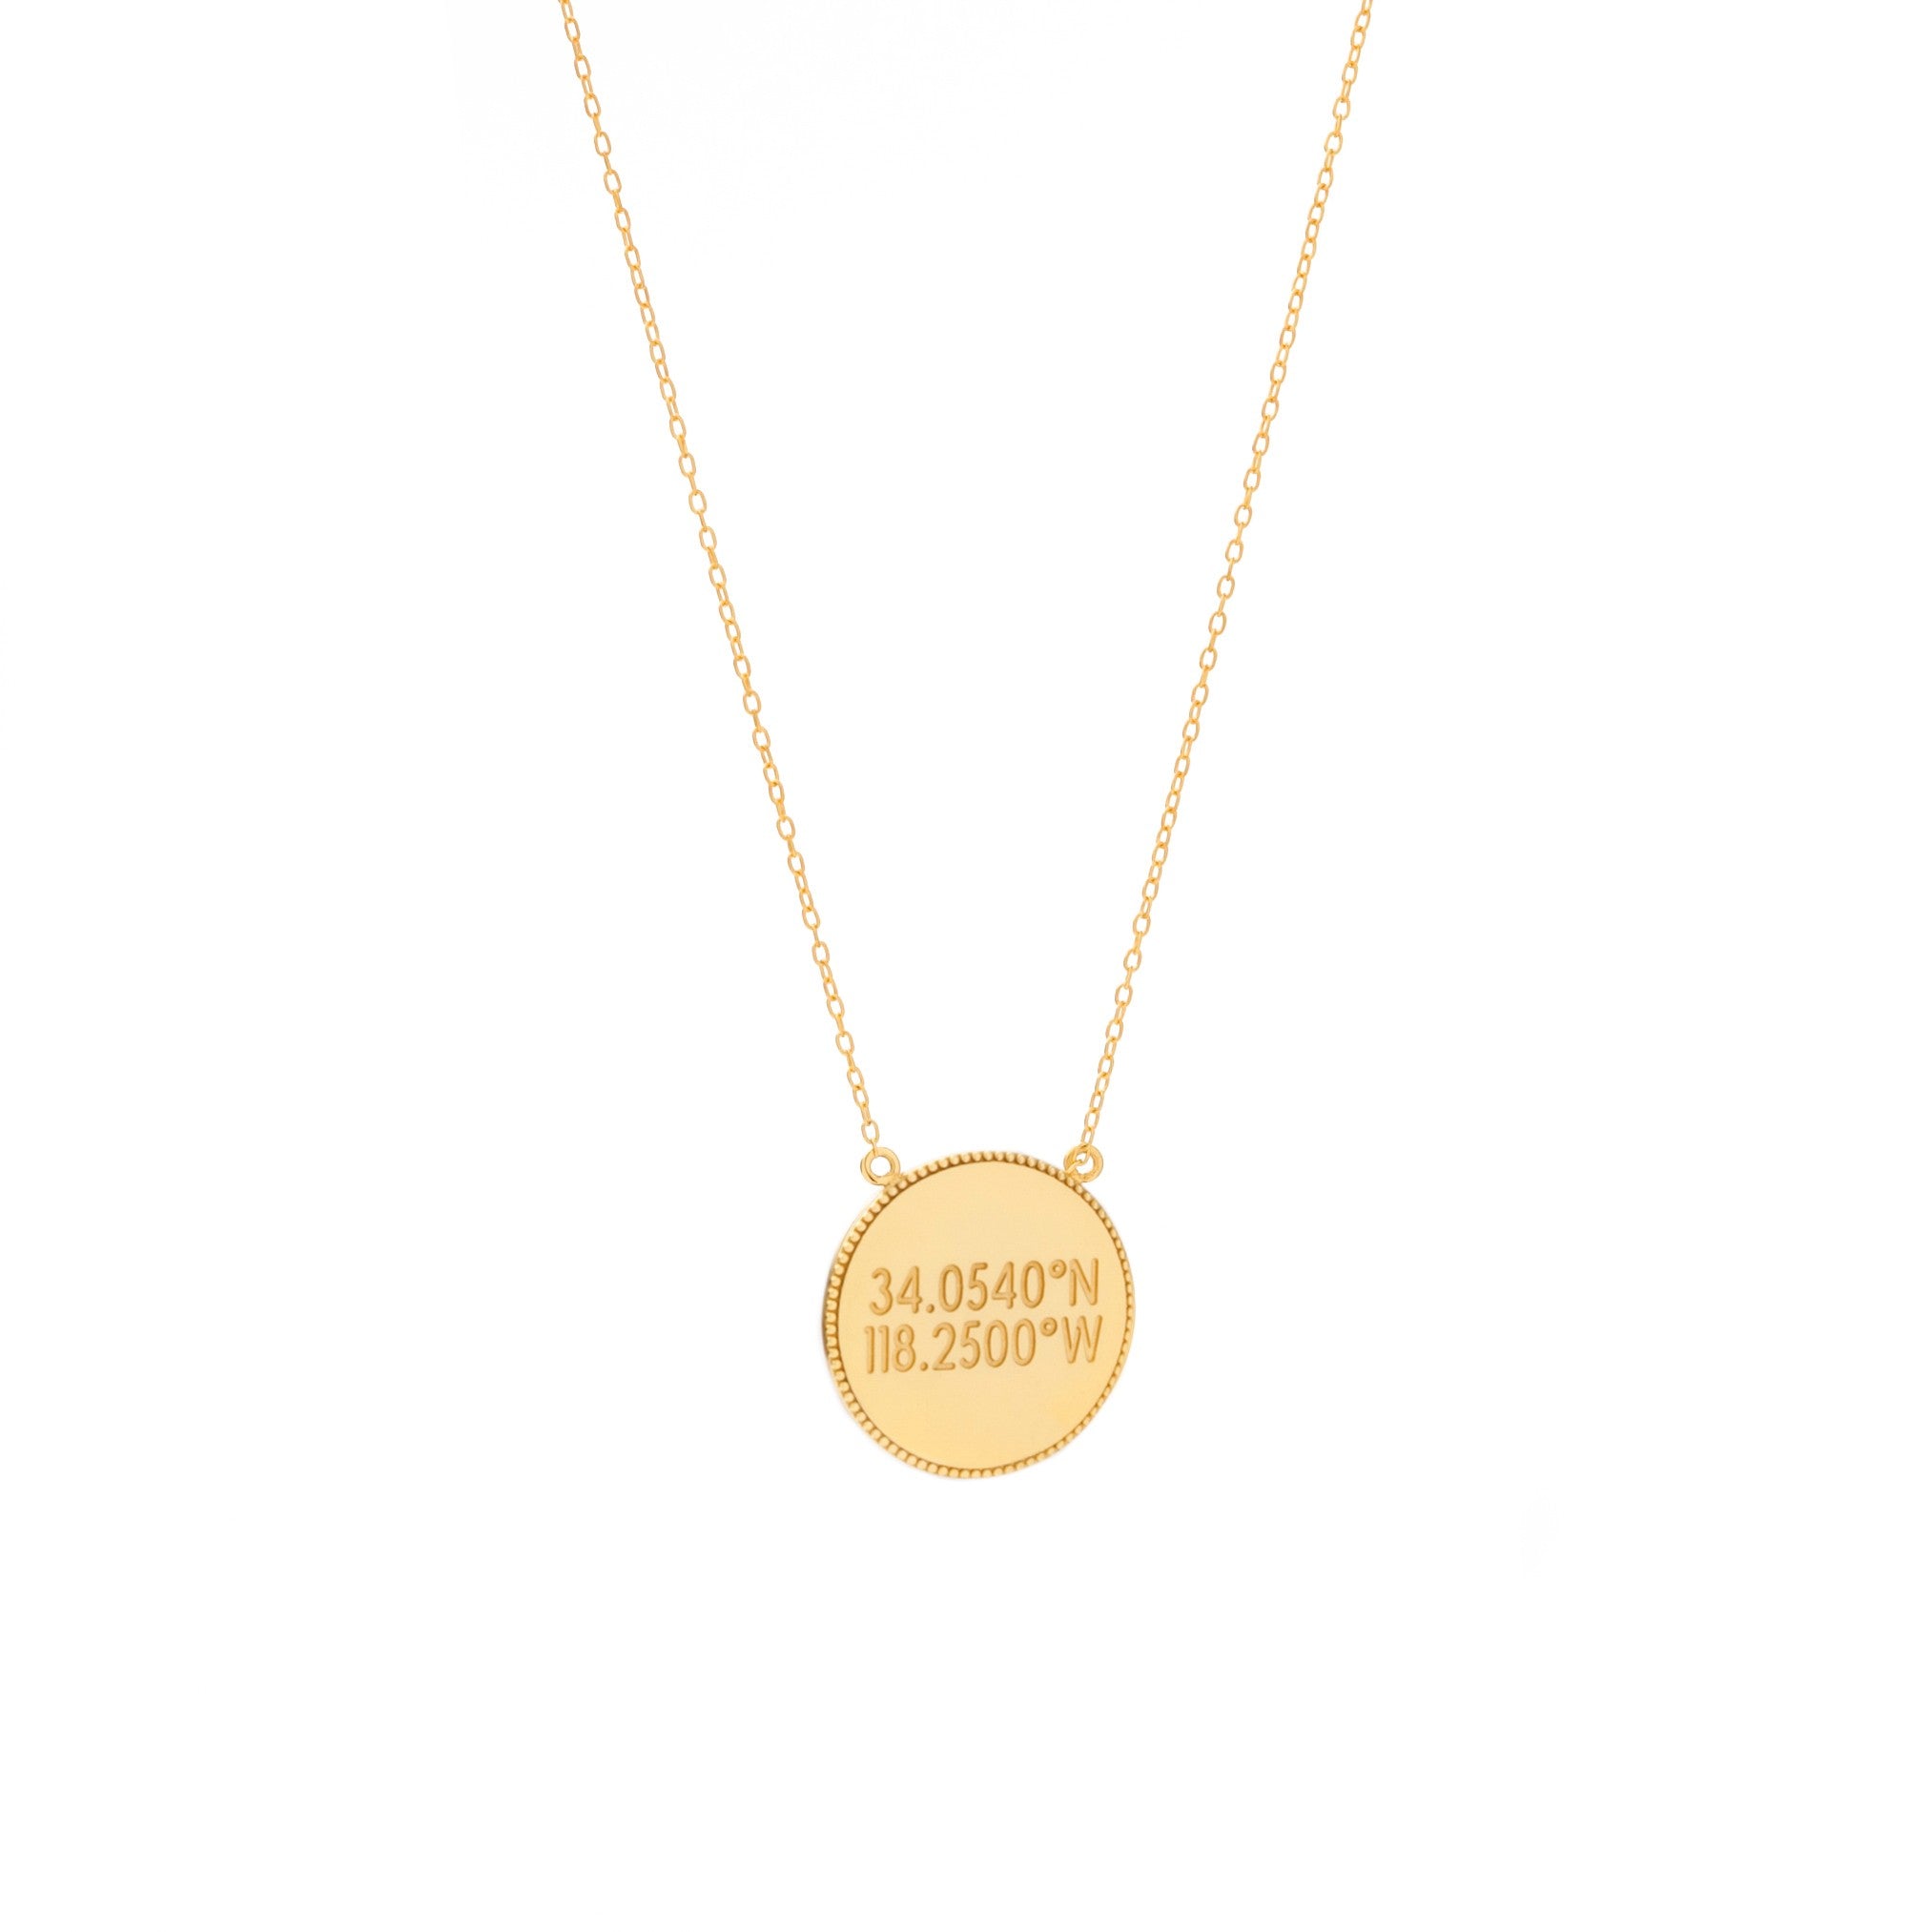 Gold Coin Necklace - Gold Coin Pendant Necklace 14K Gold Vermeil / 16 + 2